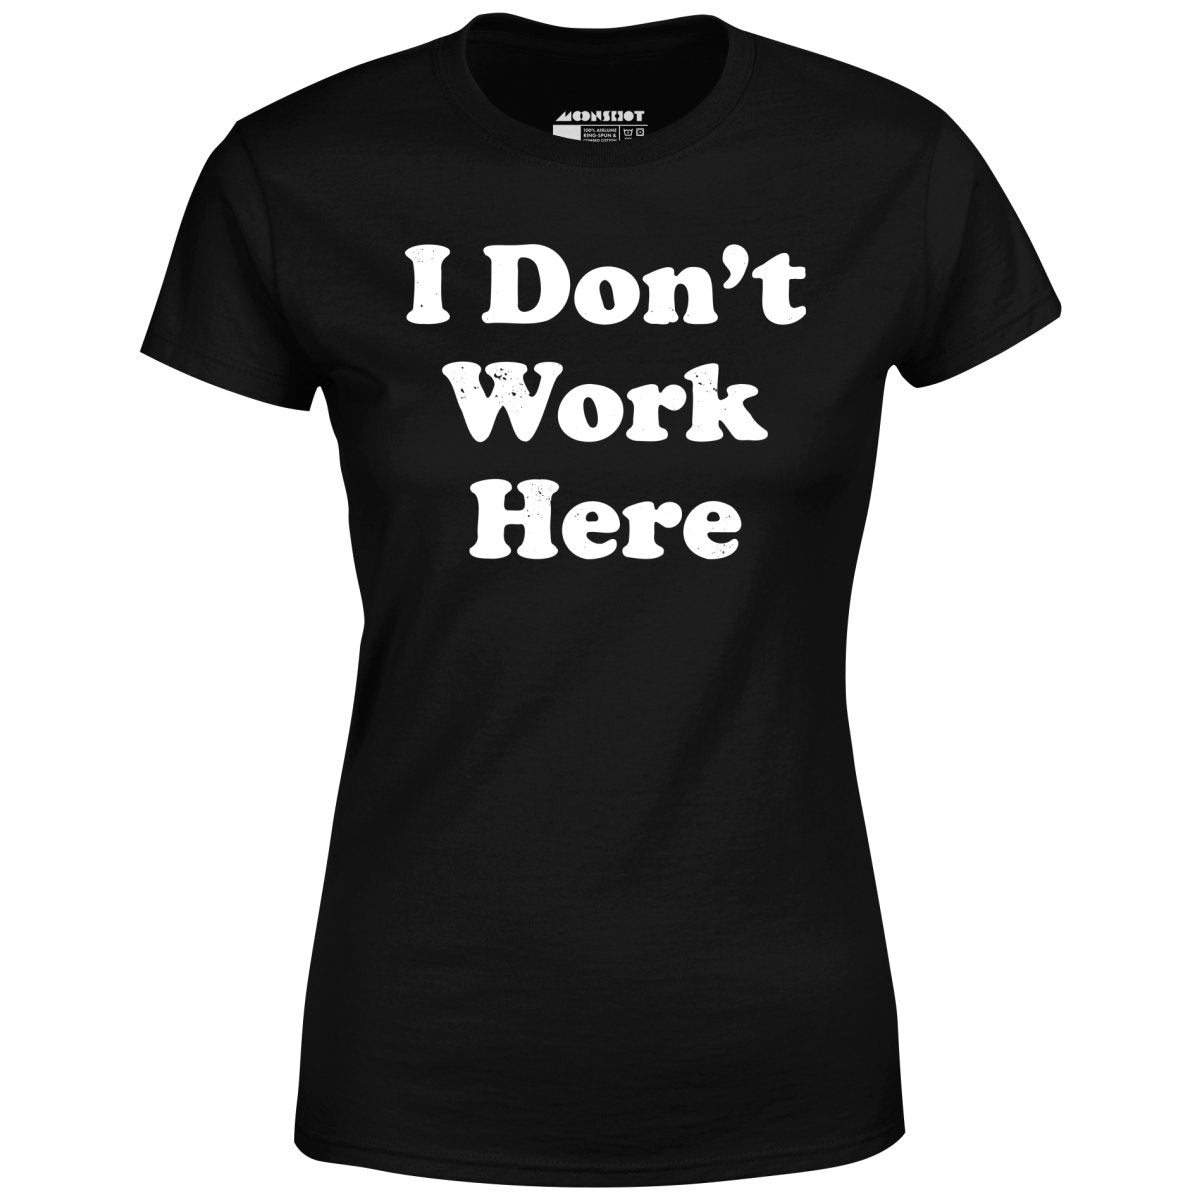 I Don't Work Here - Women's T-Shirt